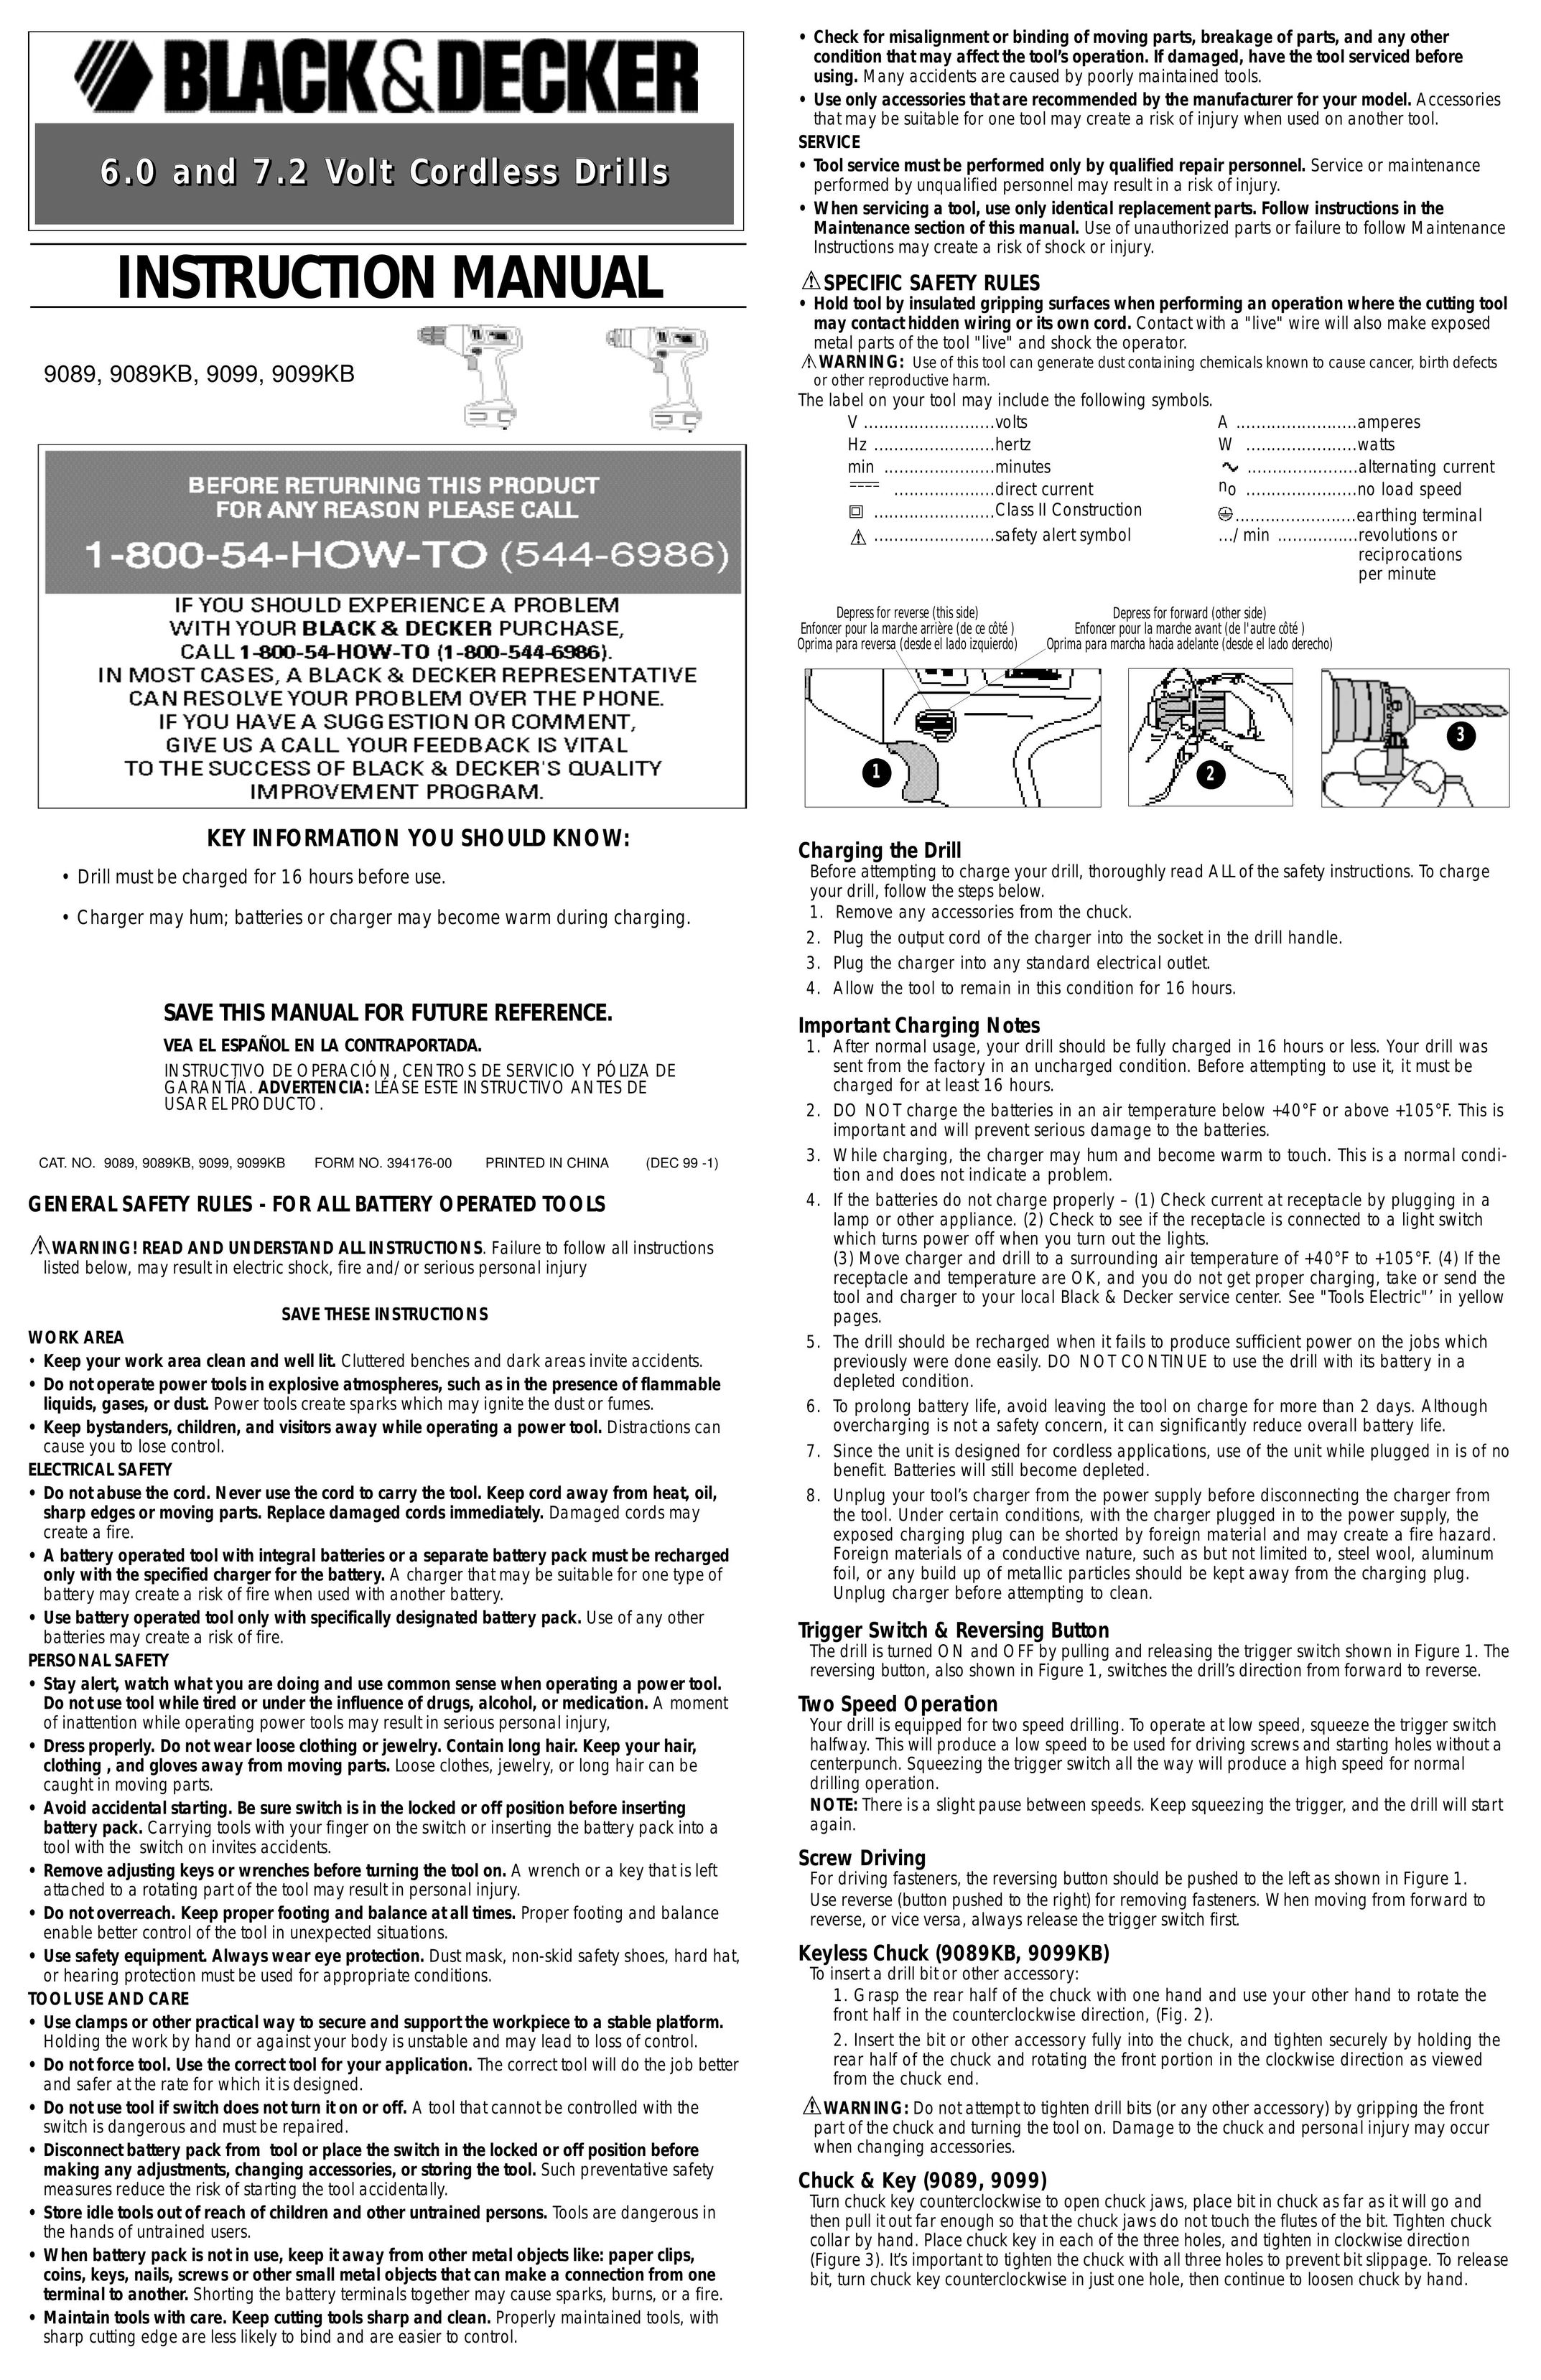 Black & Decker 9099KB Cordless Drill User Manual